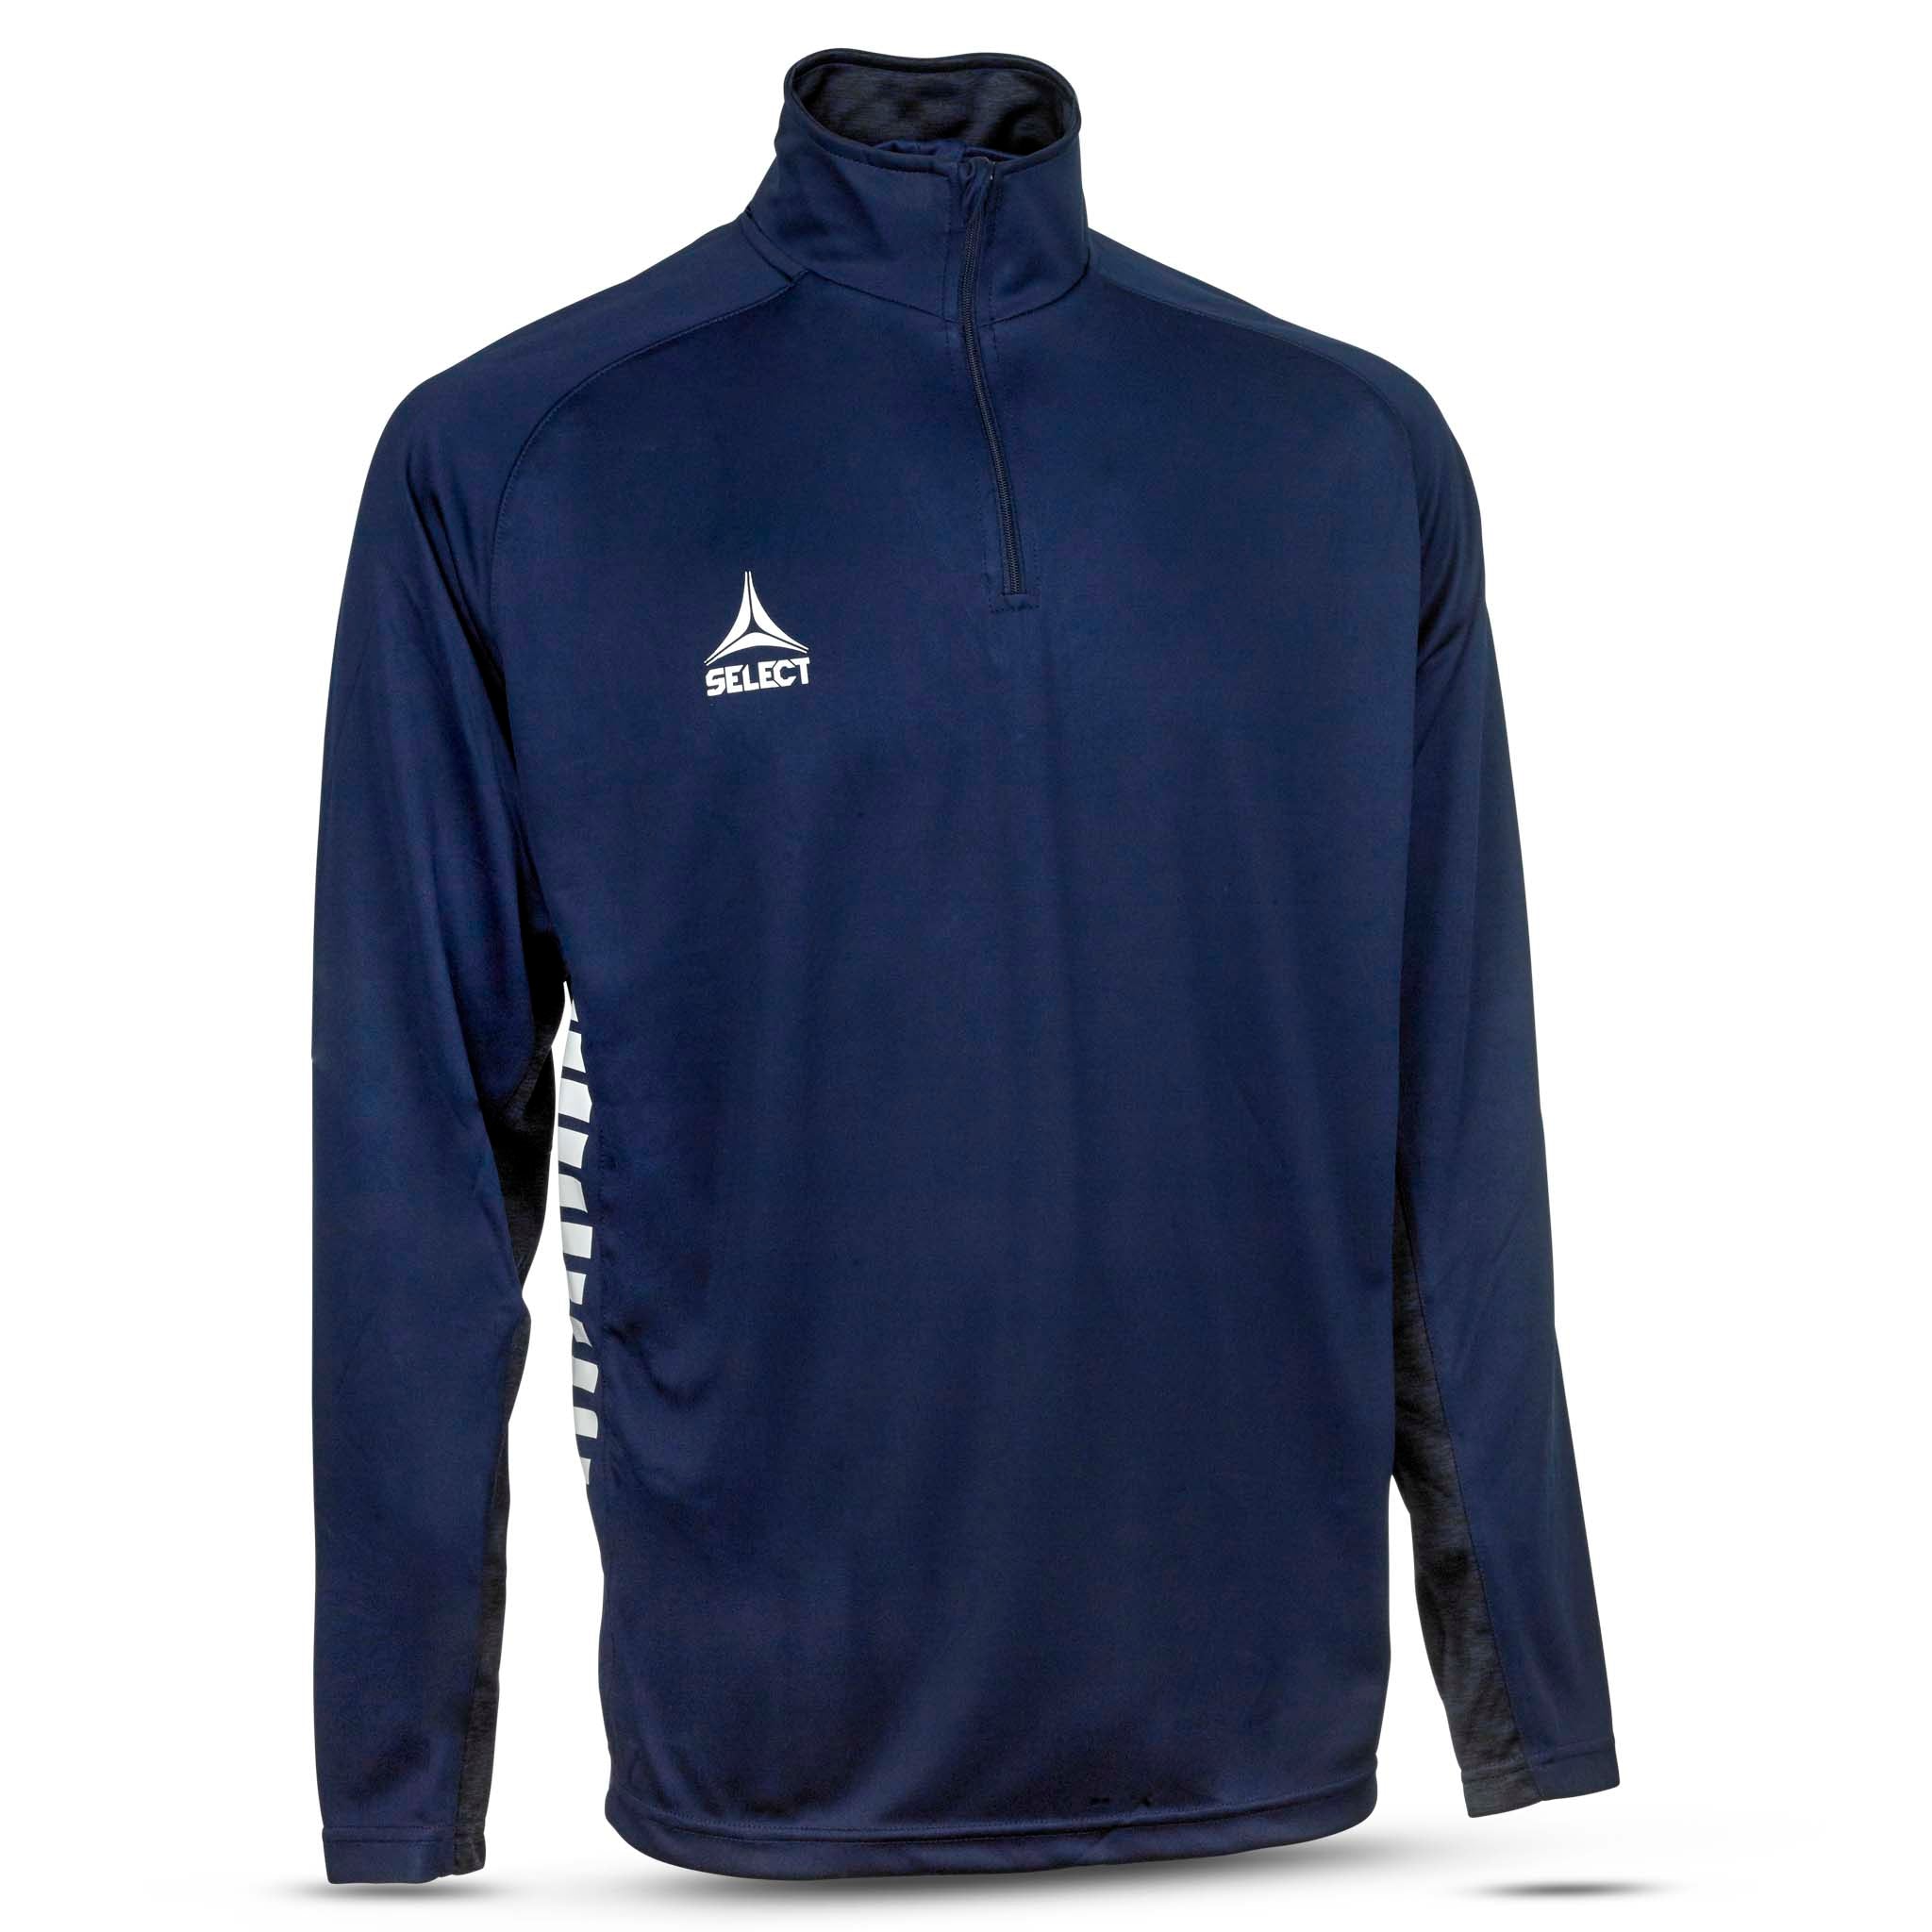 spain Träning sweatshirt 1/2 zip #färg_navy